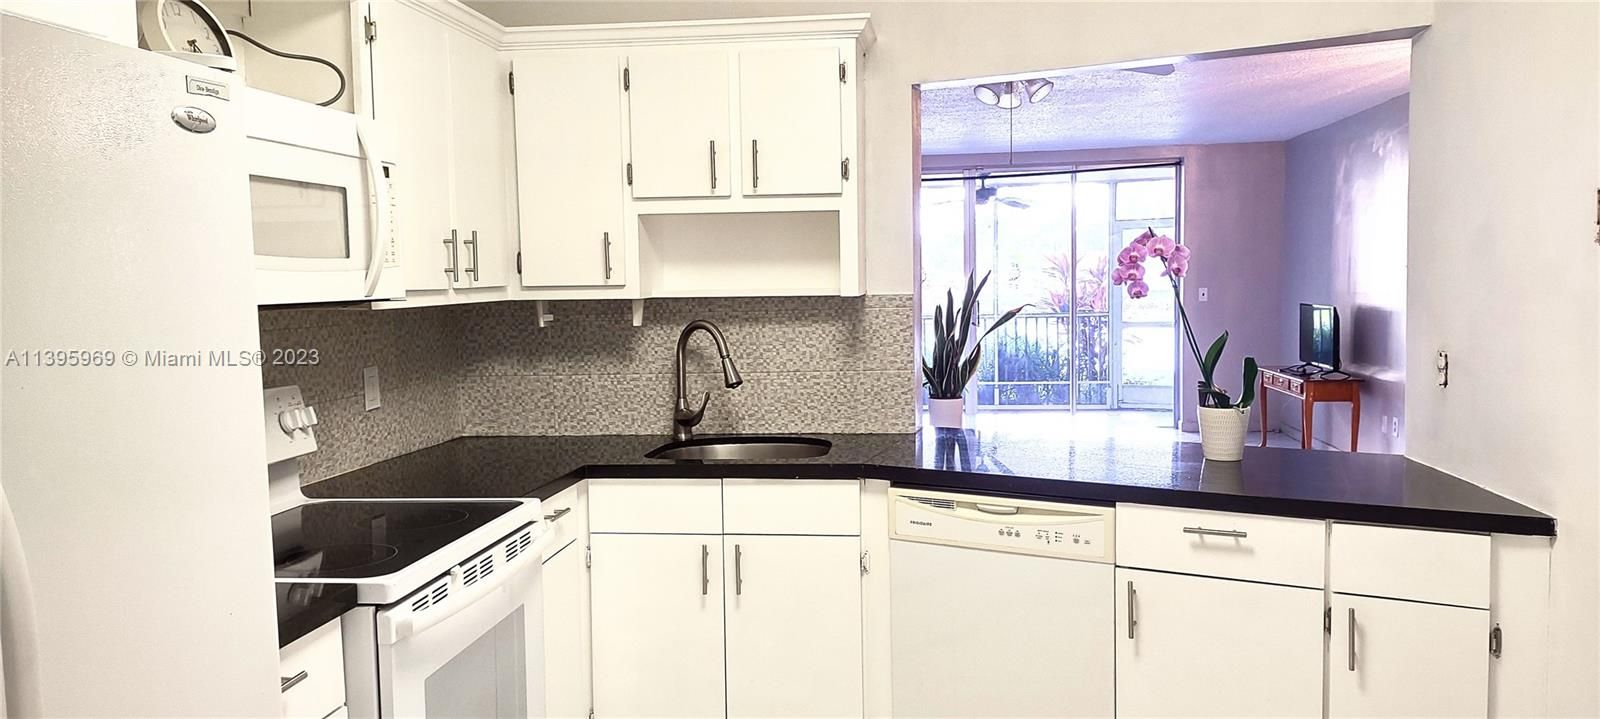 Open kitchen with granite countertop